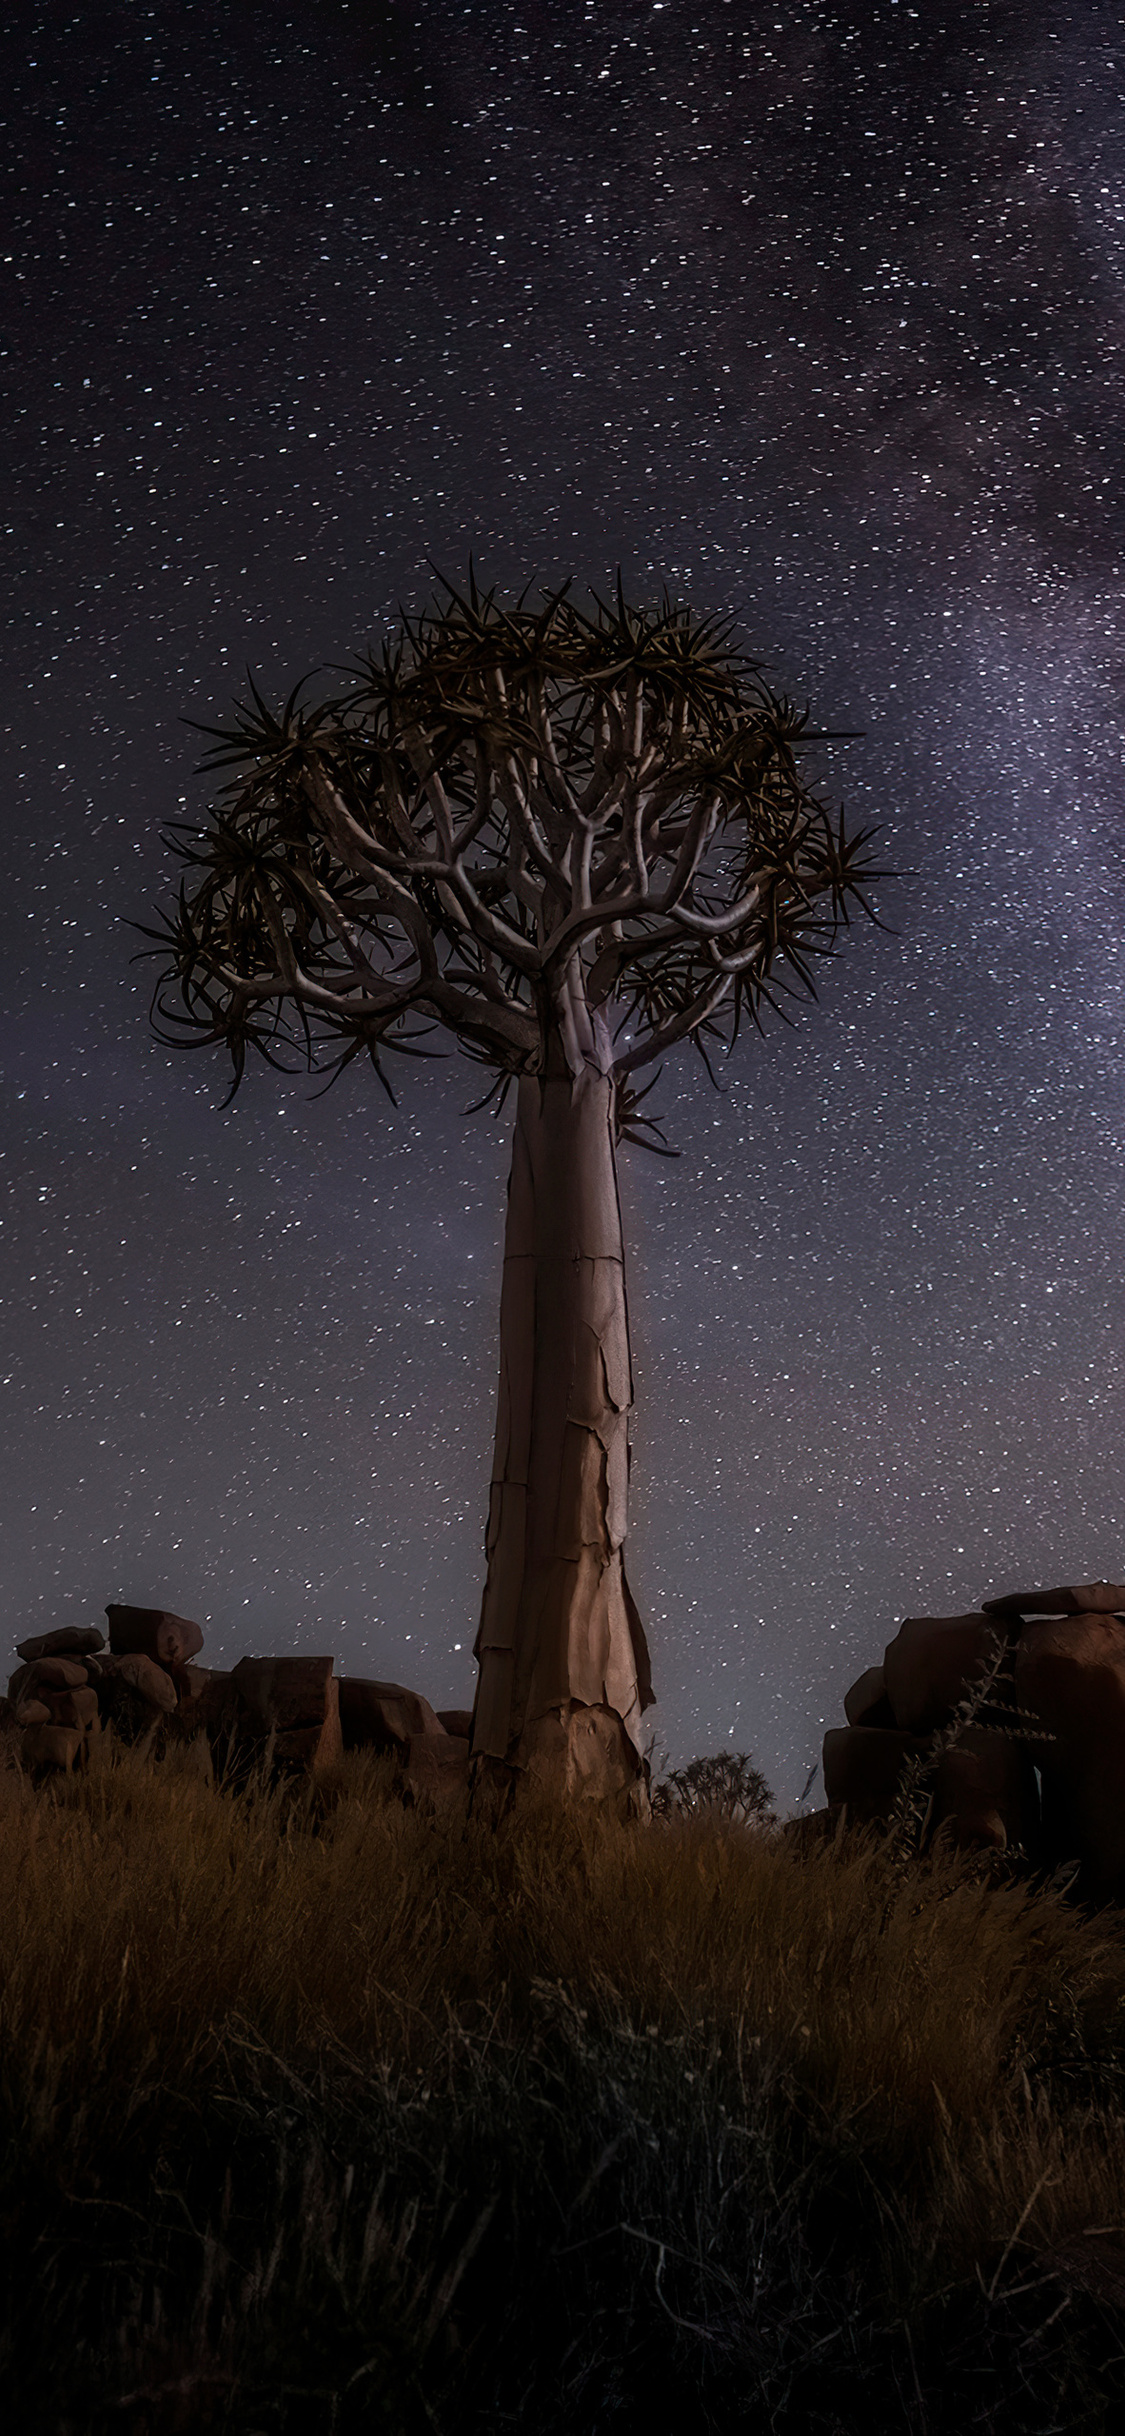 desert-trees-milky-way-night-4k-7x.jpg